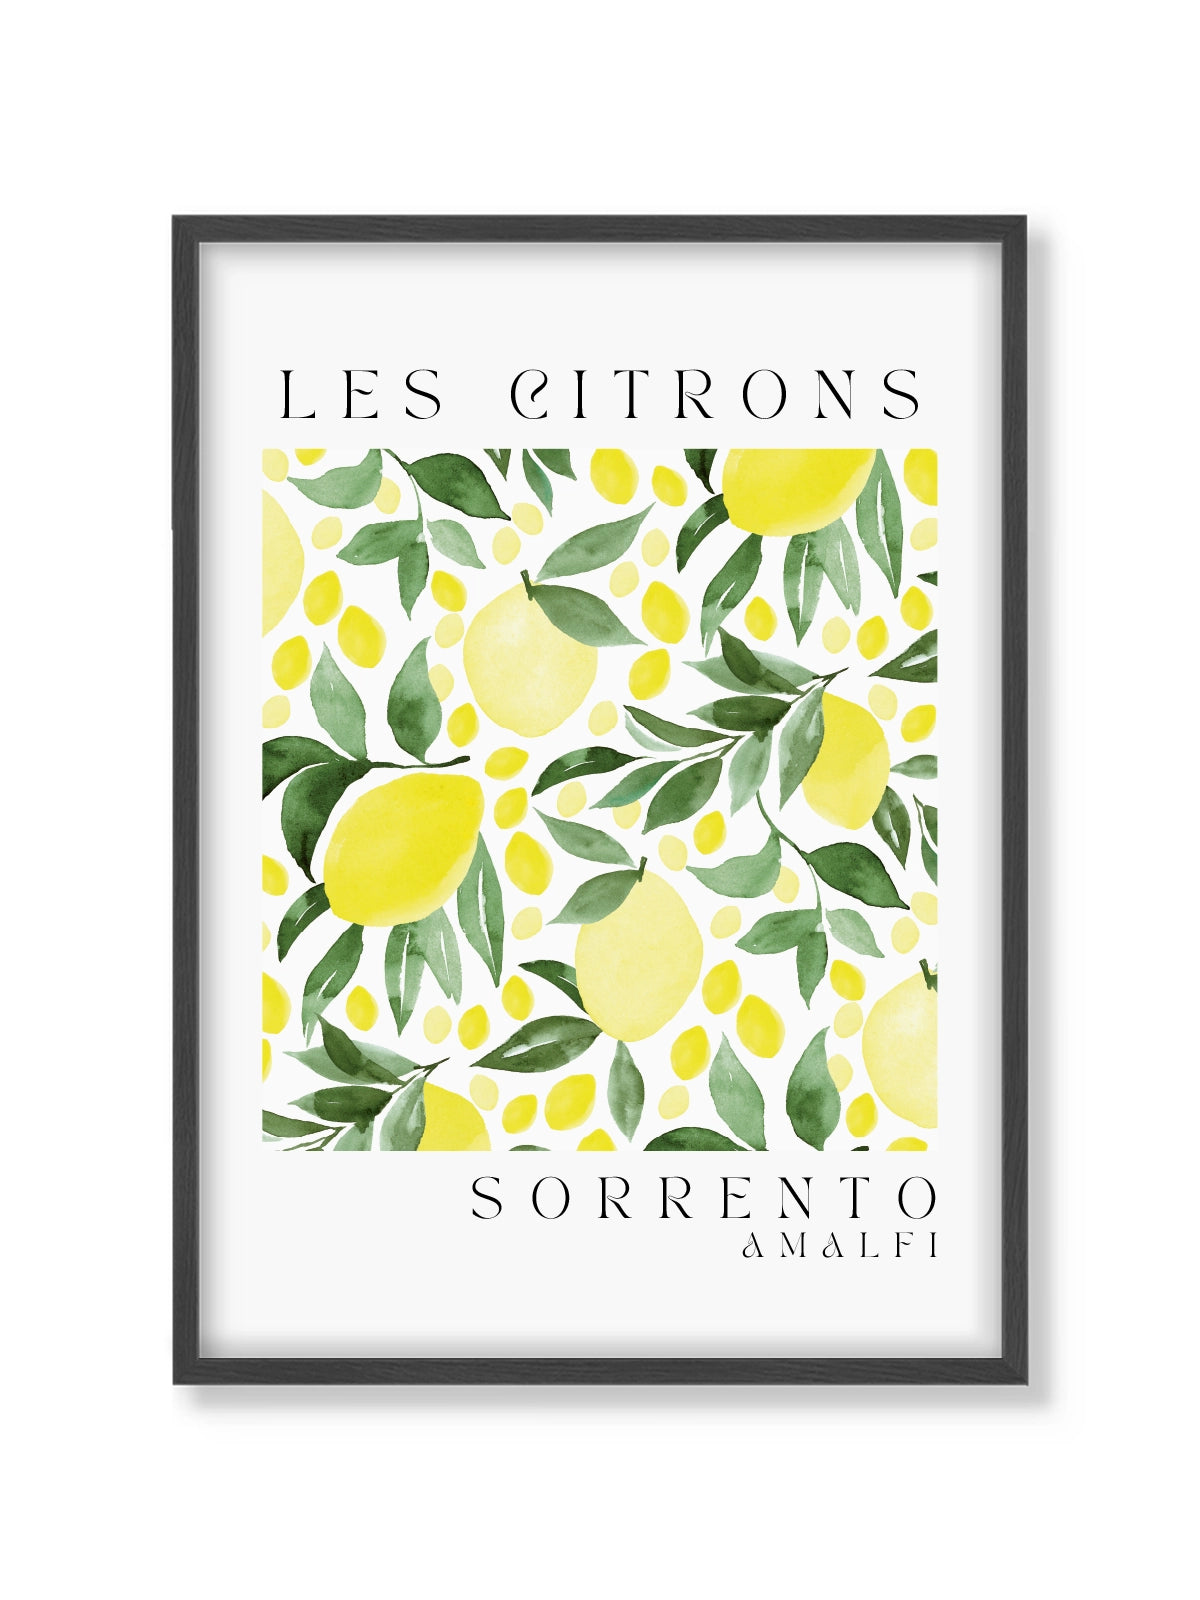 Les Citrons Sorrento Amalfi